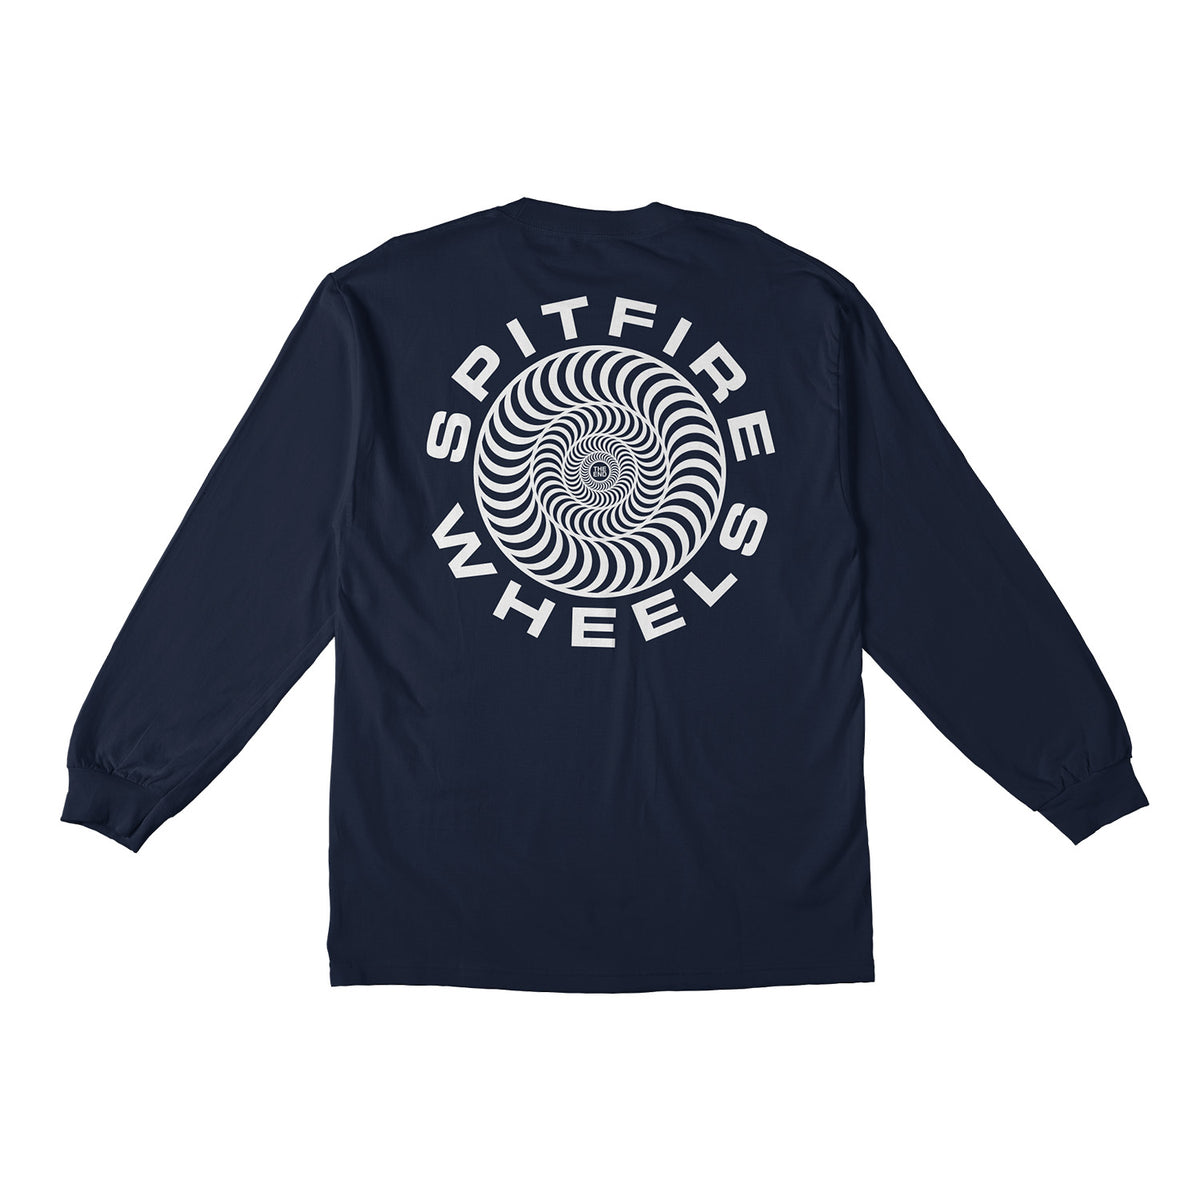 Spitfire Classic 87 Swirl Longsleeve T-Shirt